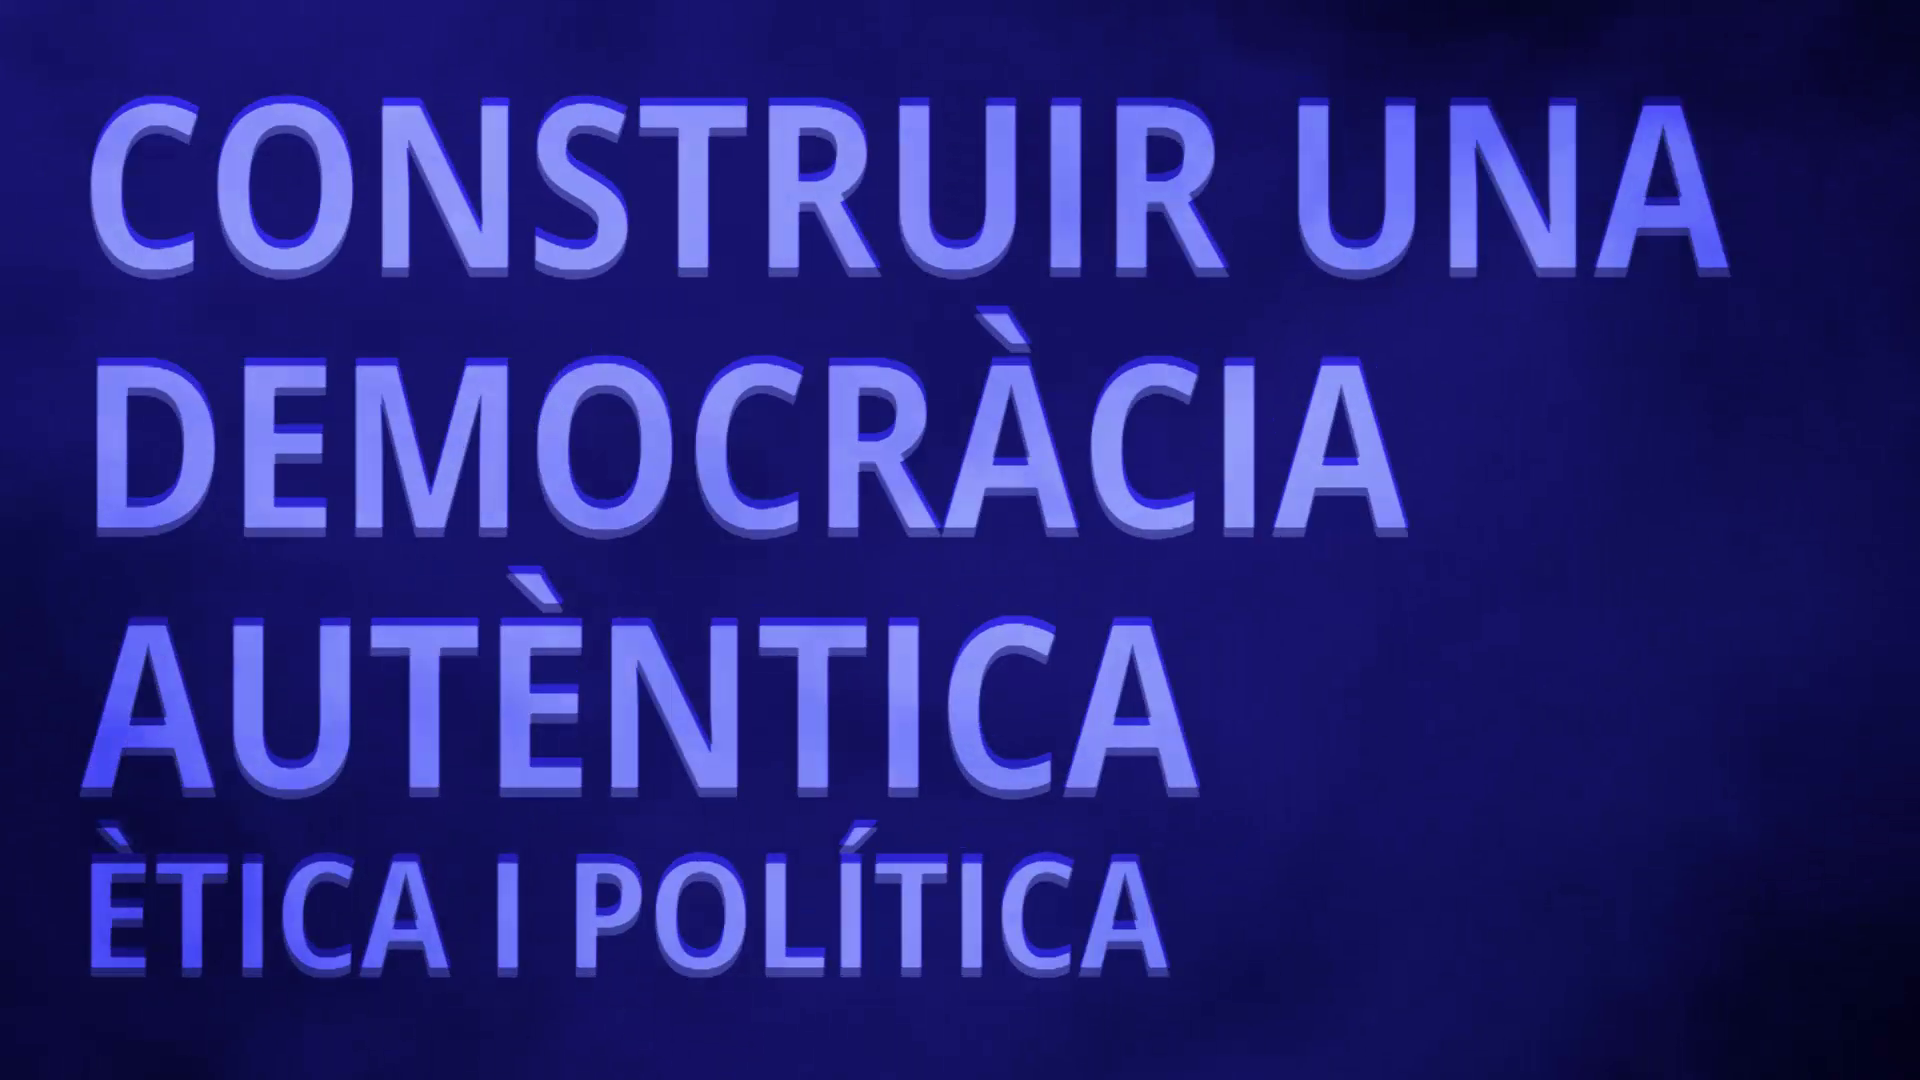  “Construir una democràcia autèntica: ètica i política”, per Adela Cortina